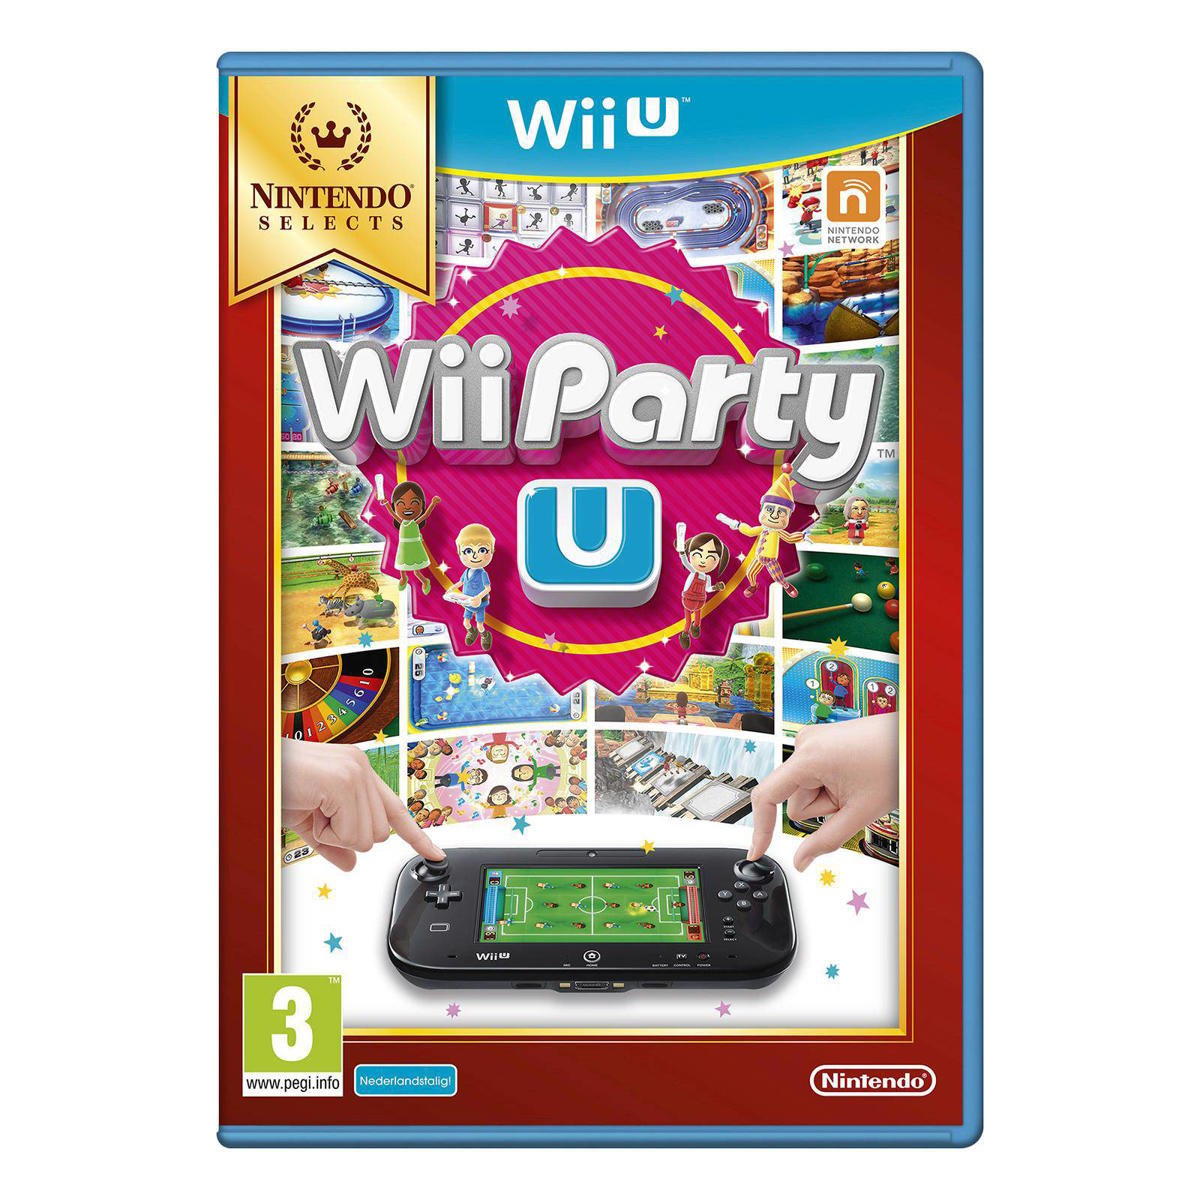 Gek Baby wazig Nintendo Wii Wii Party U (Nintendo Wii U) | wehkamp